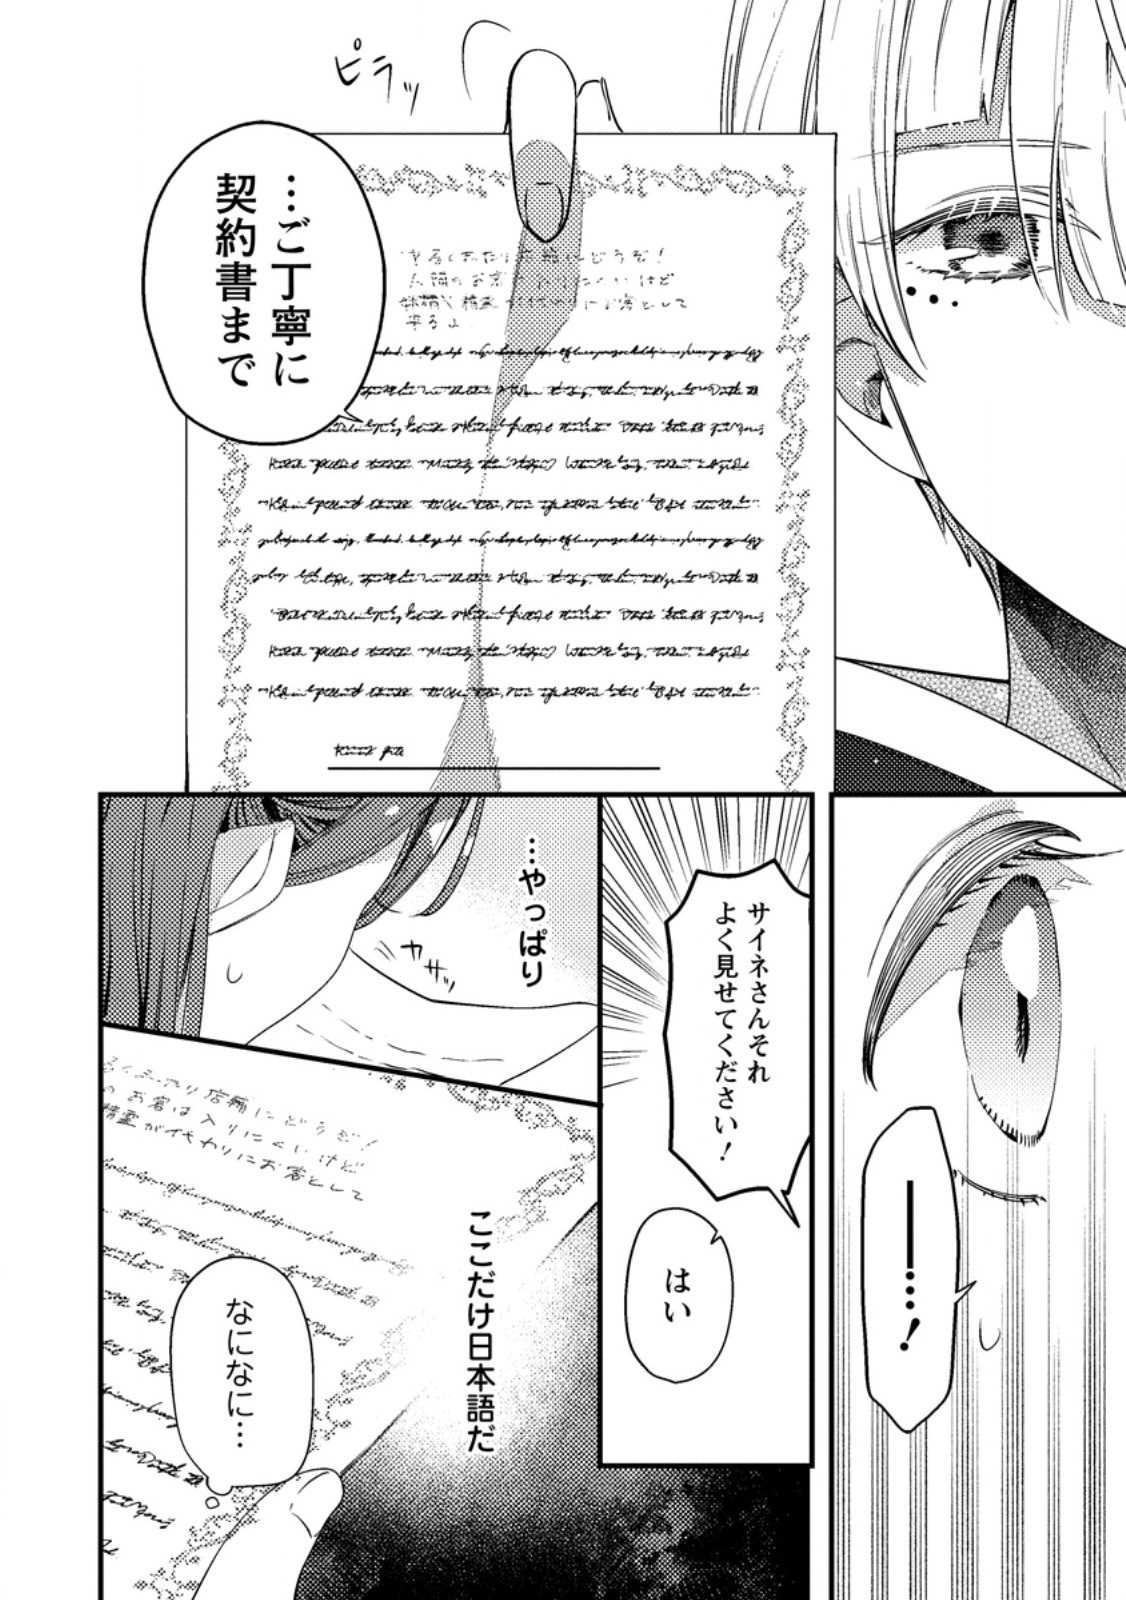 Hakoniwa no Yakujutsushi - Chapter 39.3 - Page 4